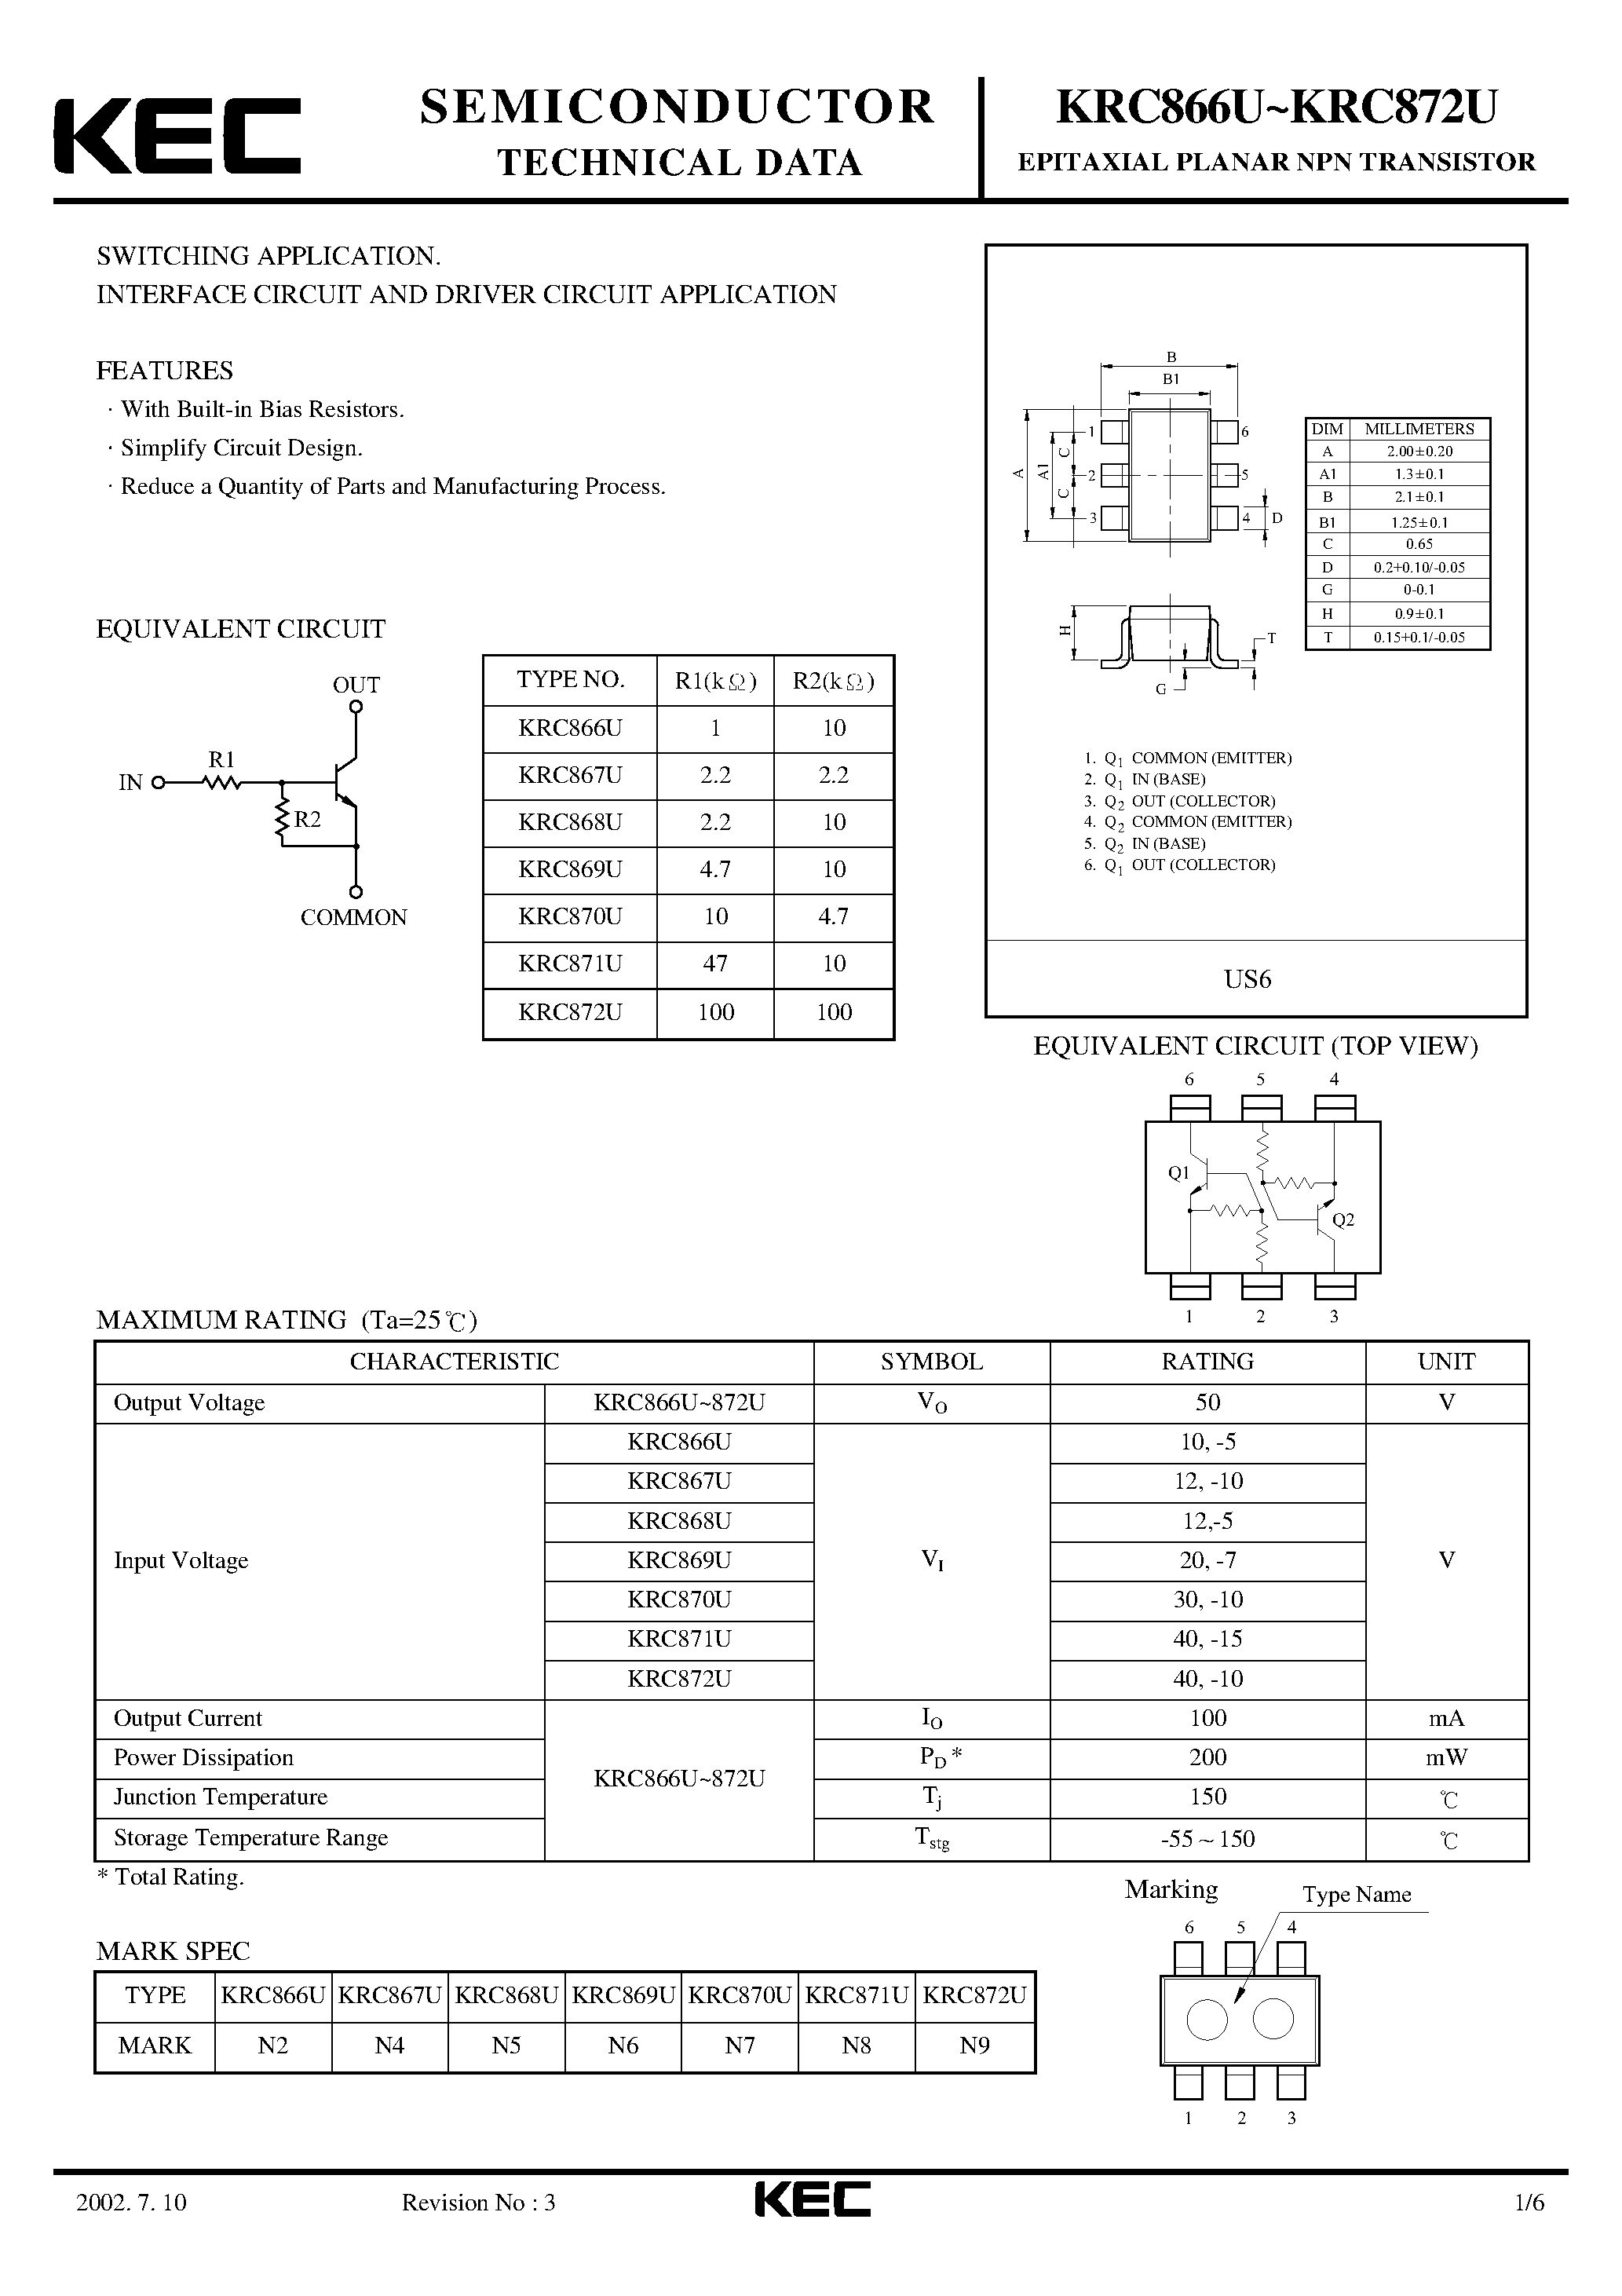 Datasheet KRC866U - (KRC866U - KRC872U) EPITAXIAL PLANAR NPN TRANSISTOR page 1